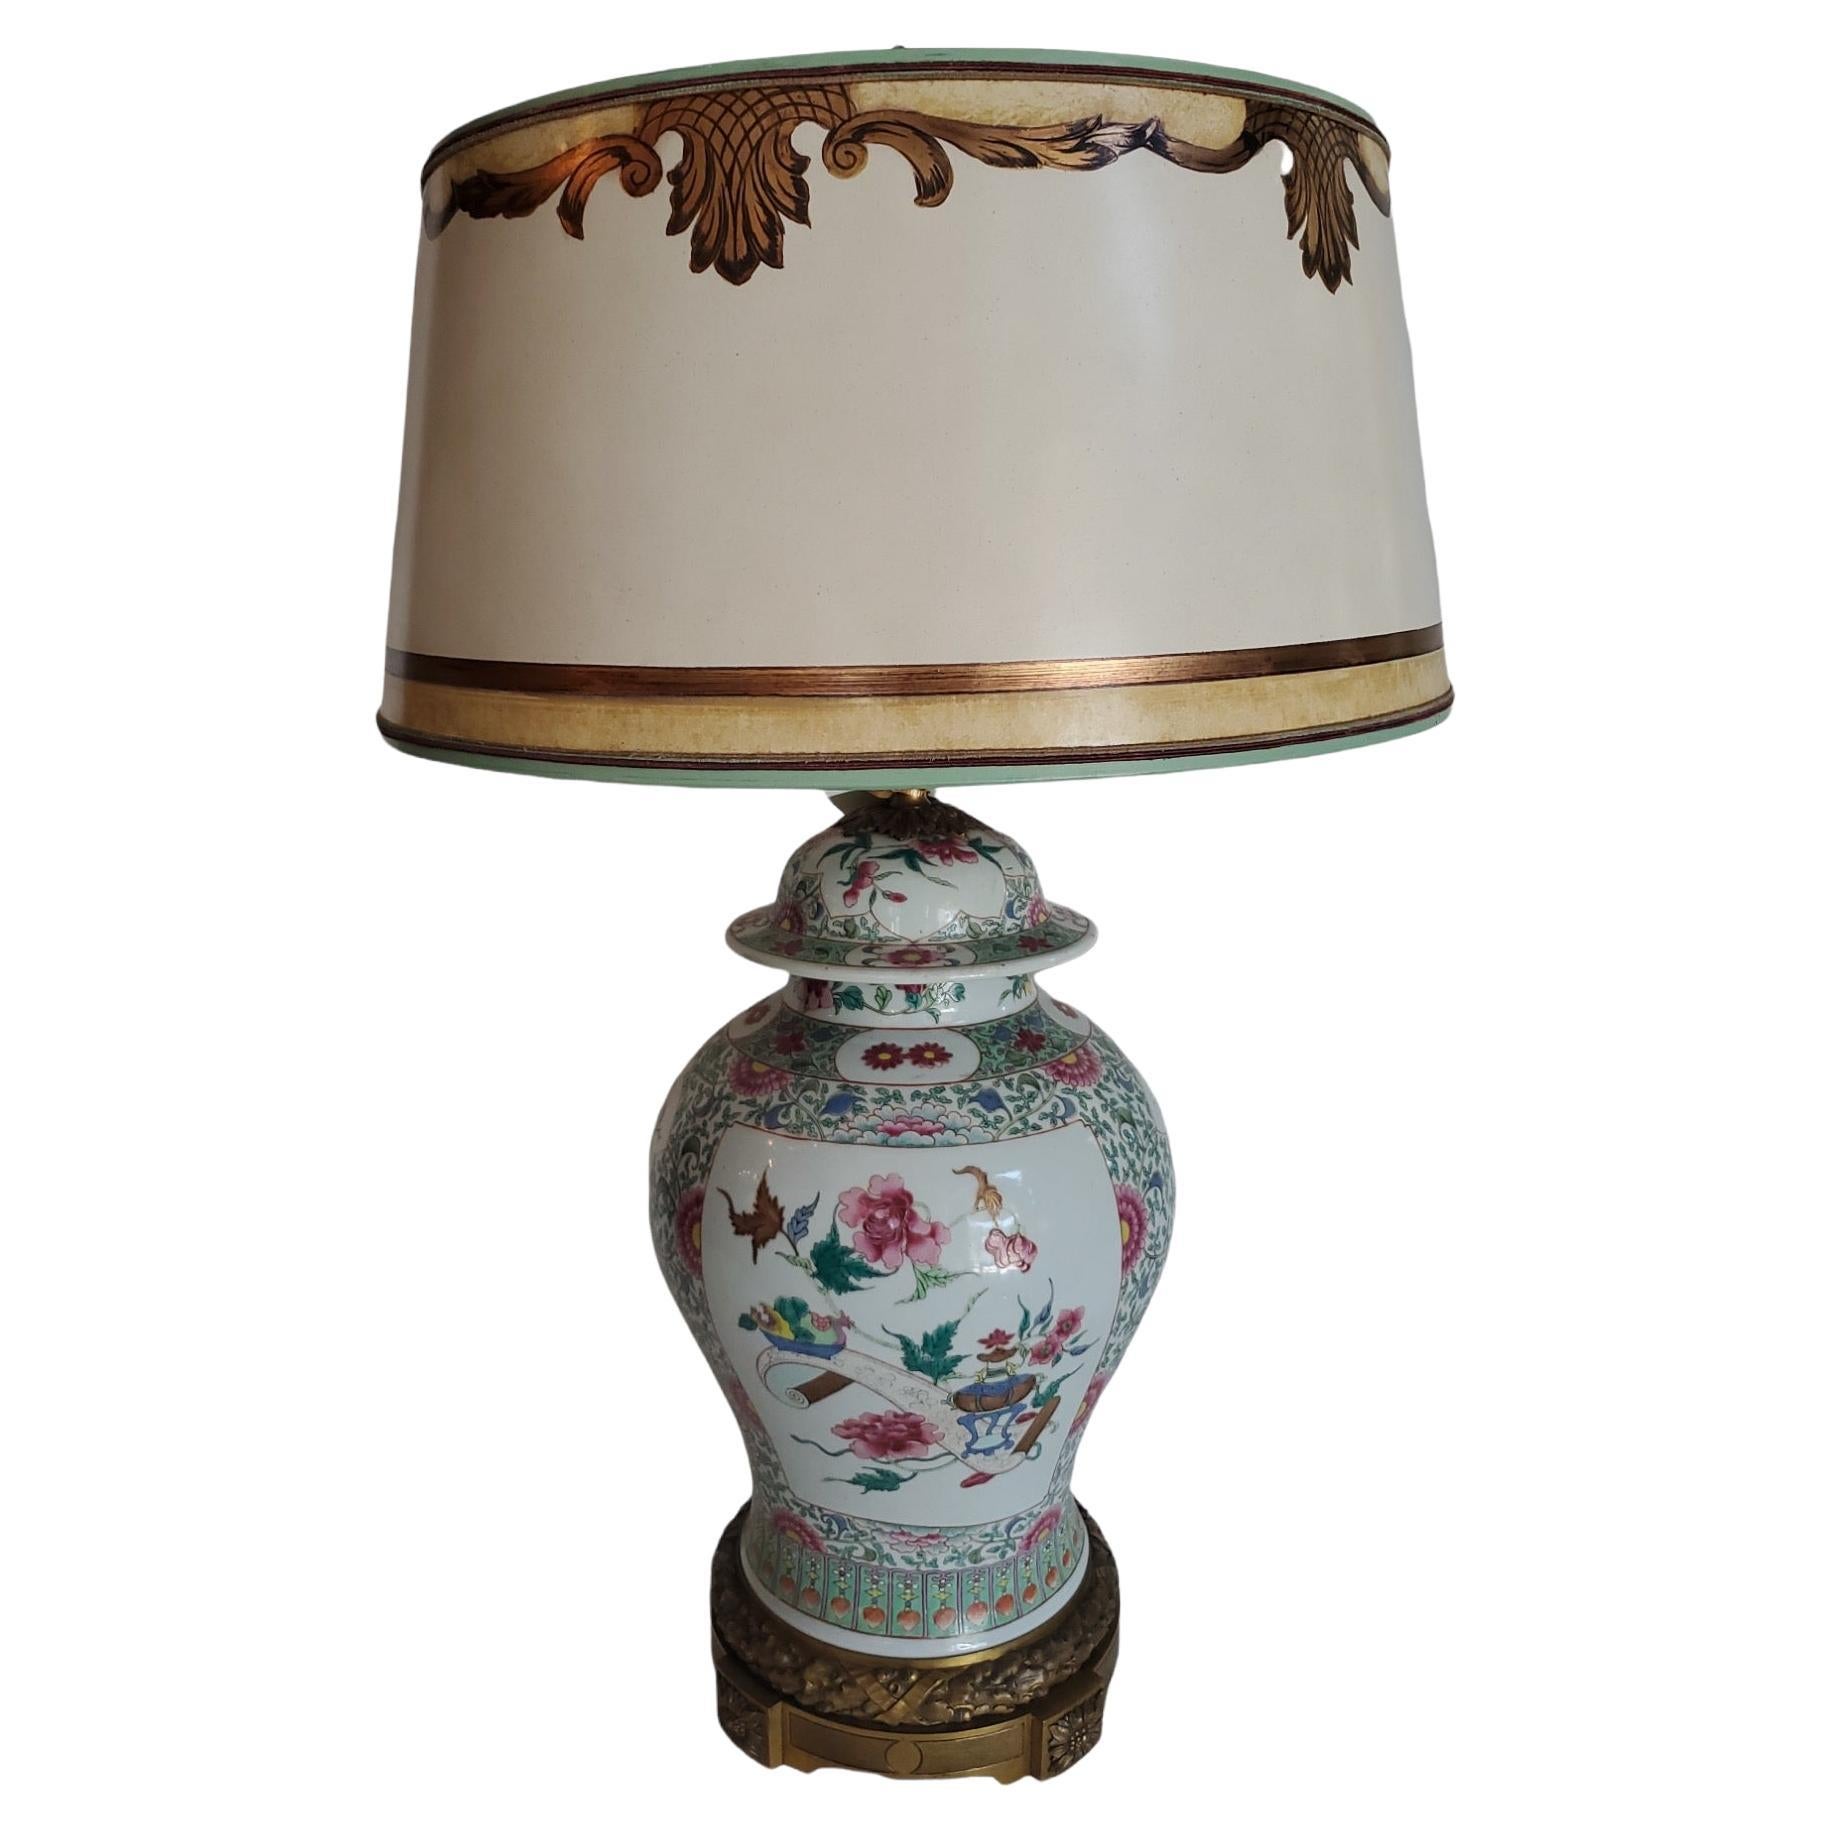 19th Century Chinese Export Ginger Jar Lamp